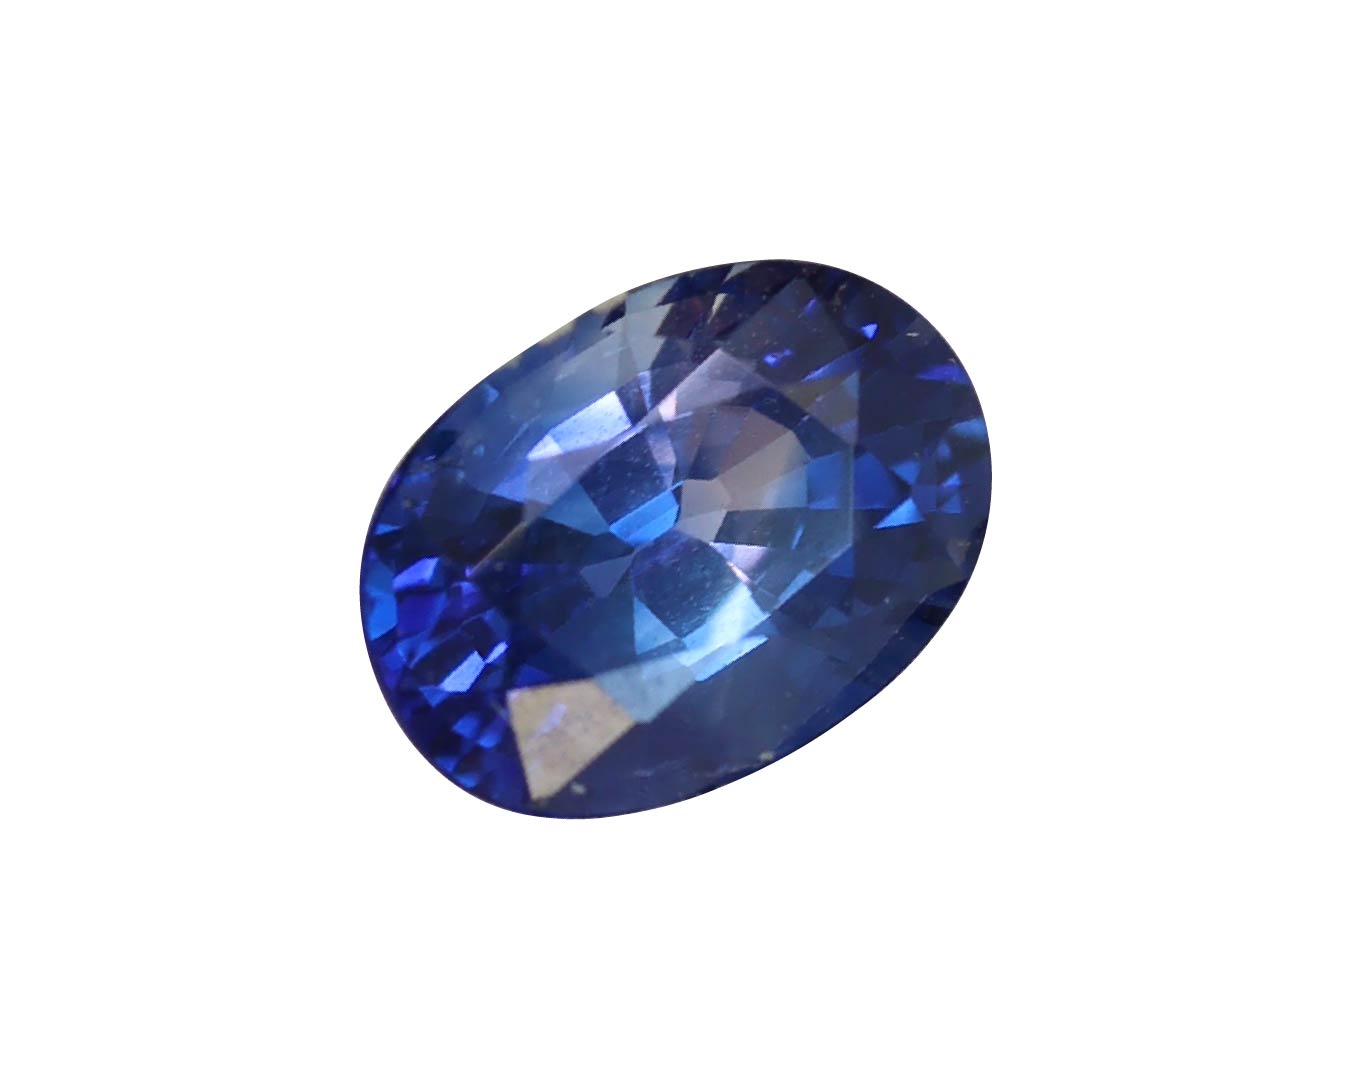 Piedra Zafiro Azul 1.17cts S-1426